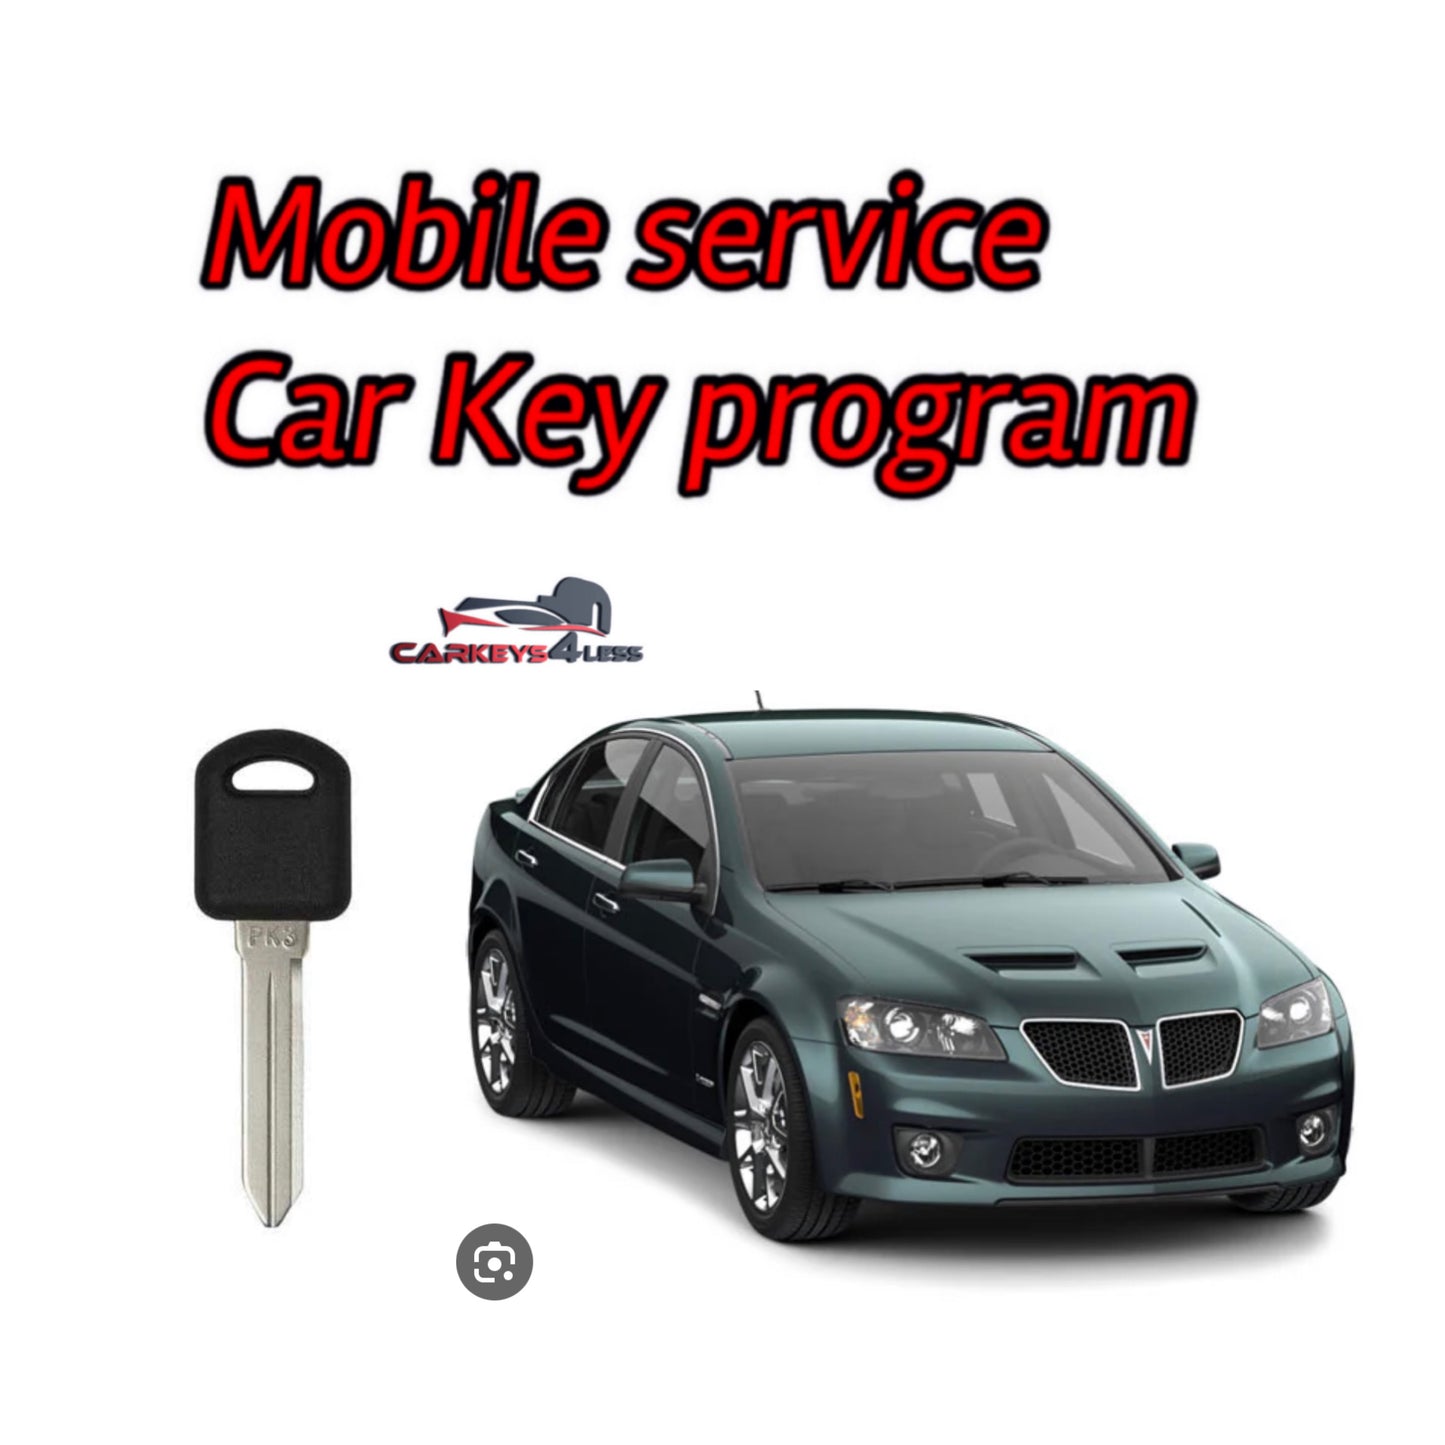 Mobile service foar a car key replacement